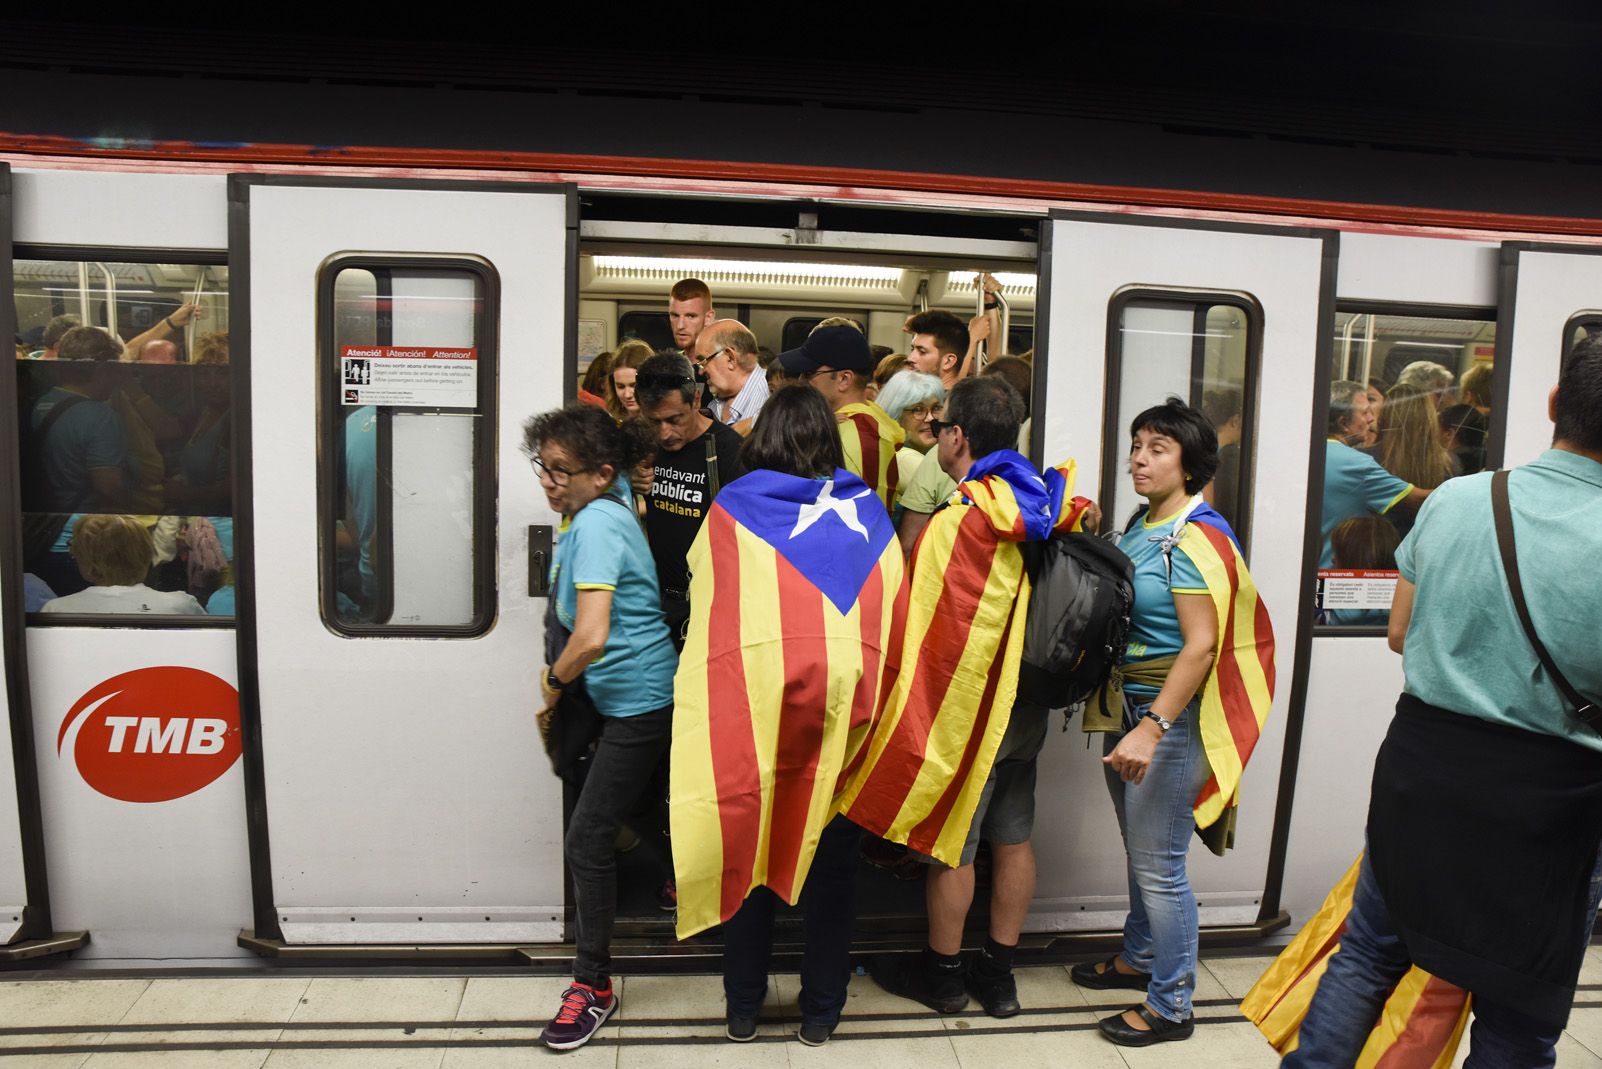 diada nacional catalana 11 setembre barcelona 